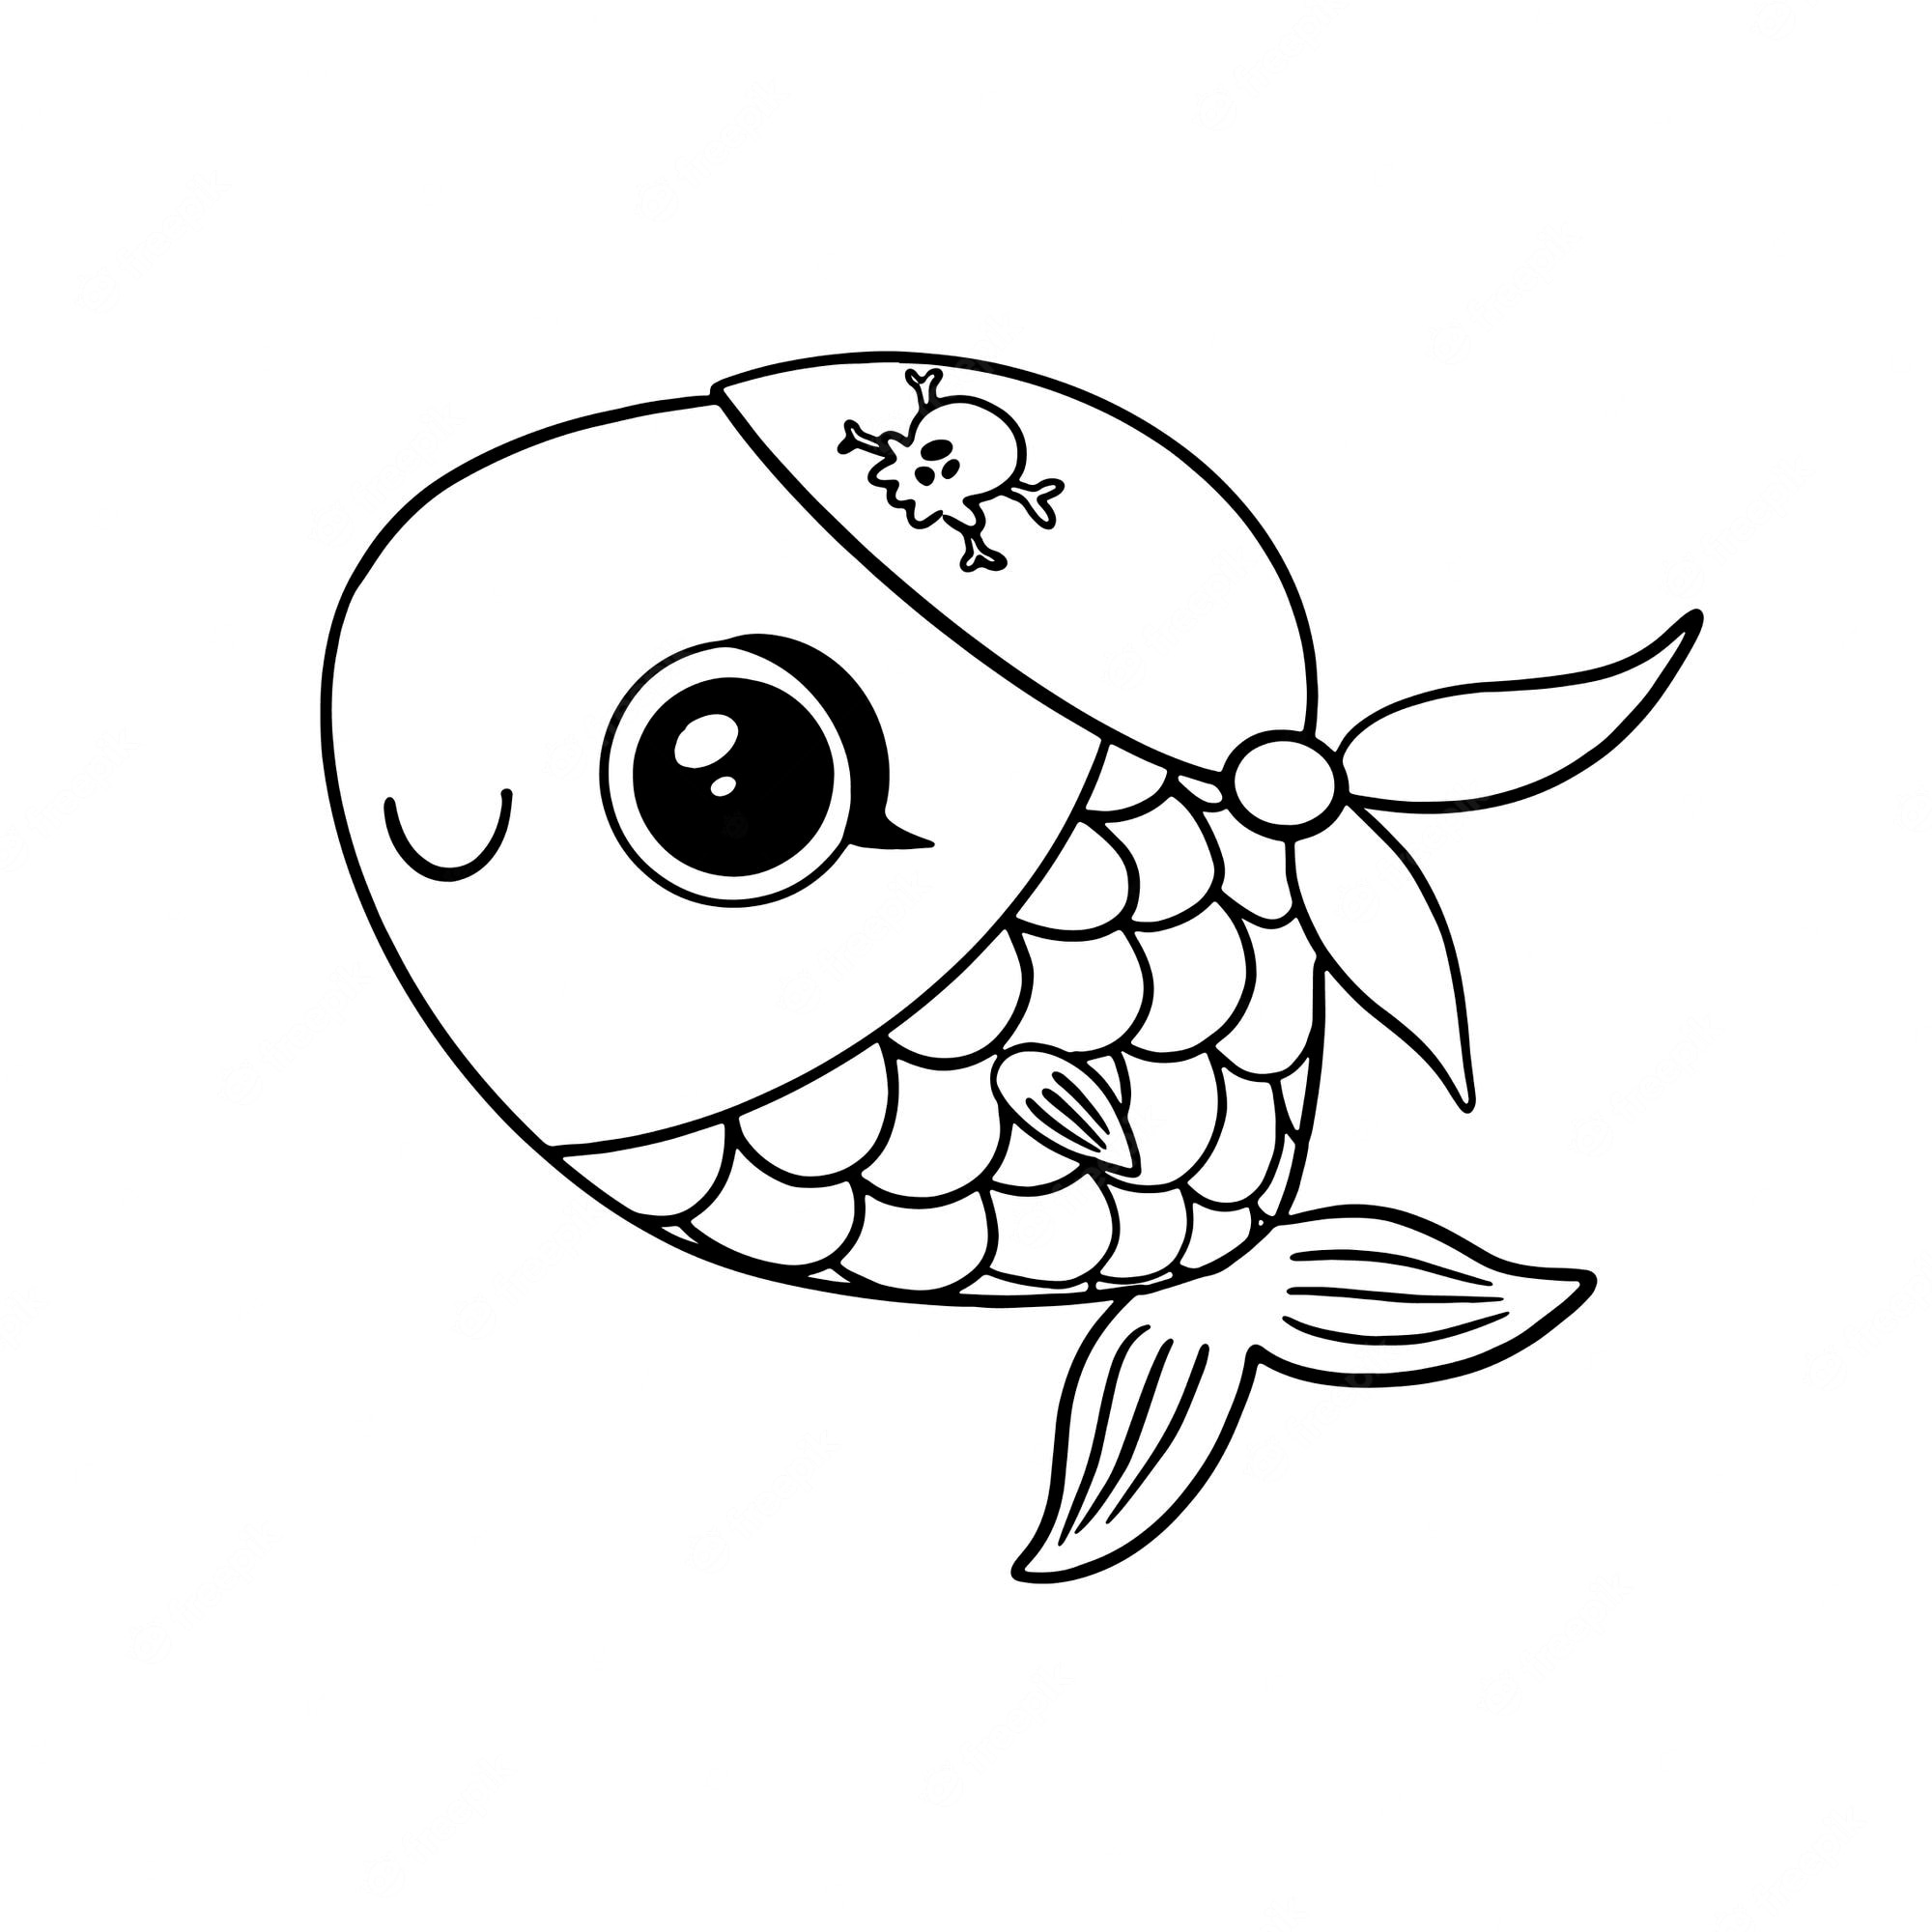 Pirate Fish coloring sheet - SheetalColor.com